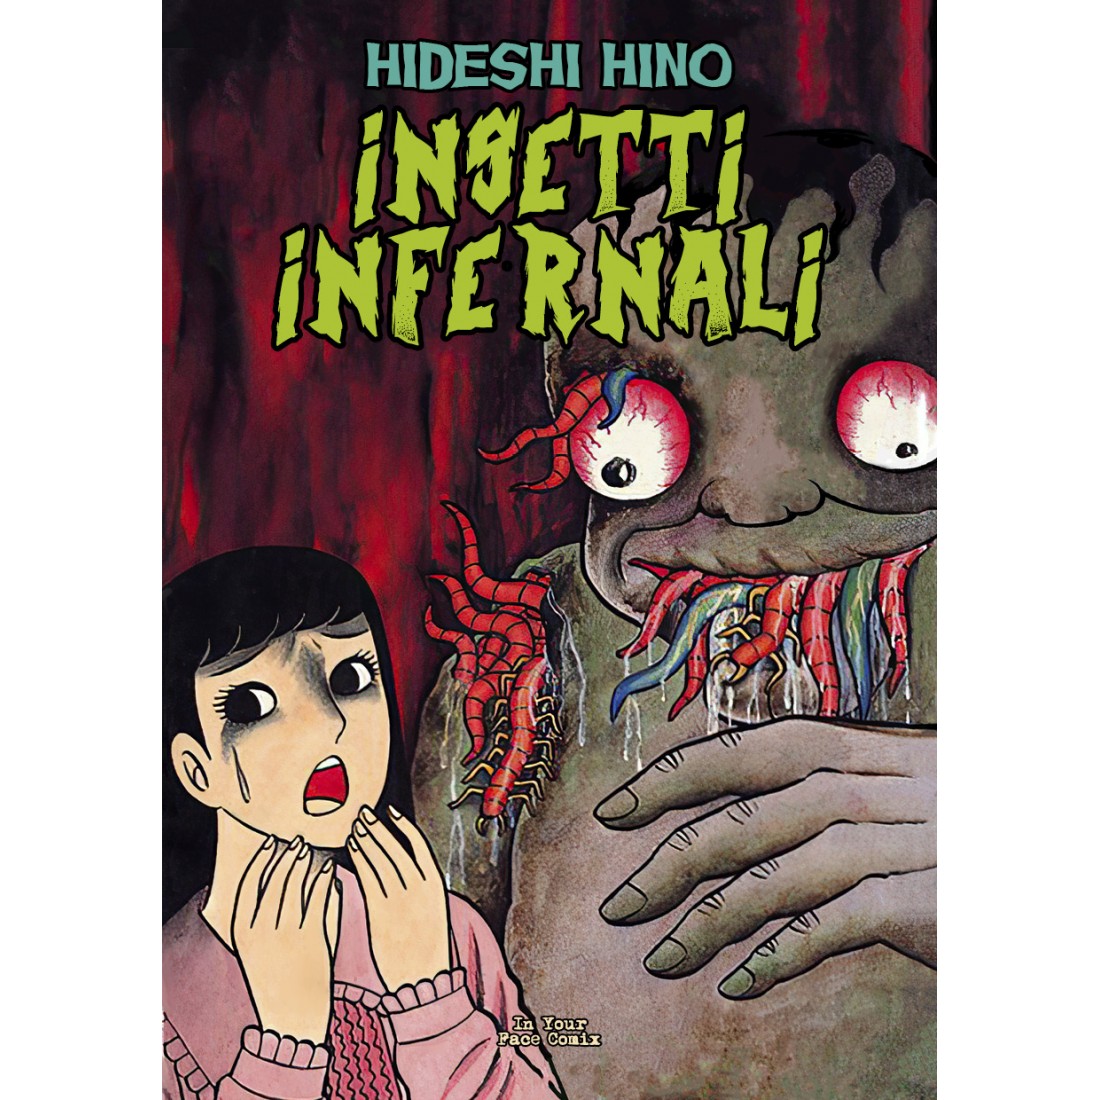 Insetti infernali (Paperback, italiano language, Edizioni Latitudine 42)